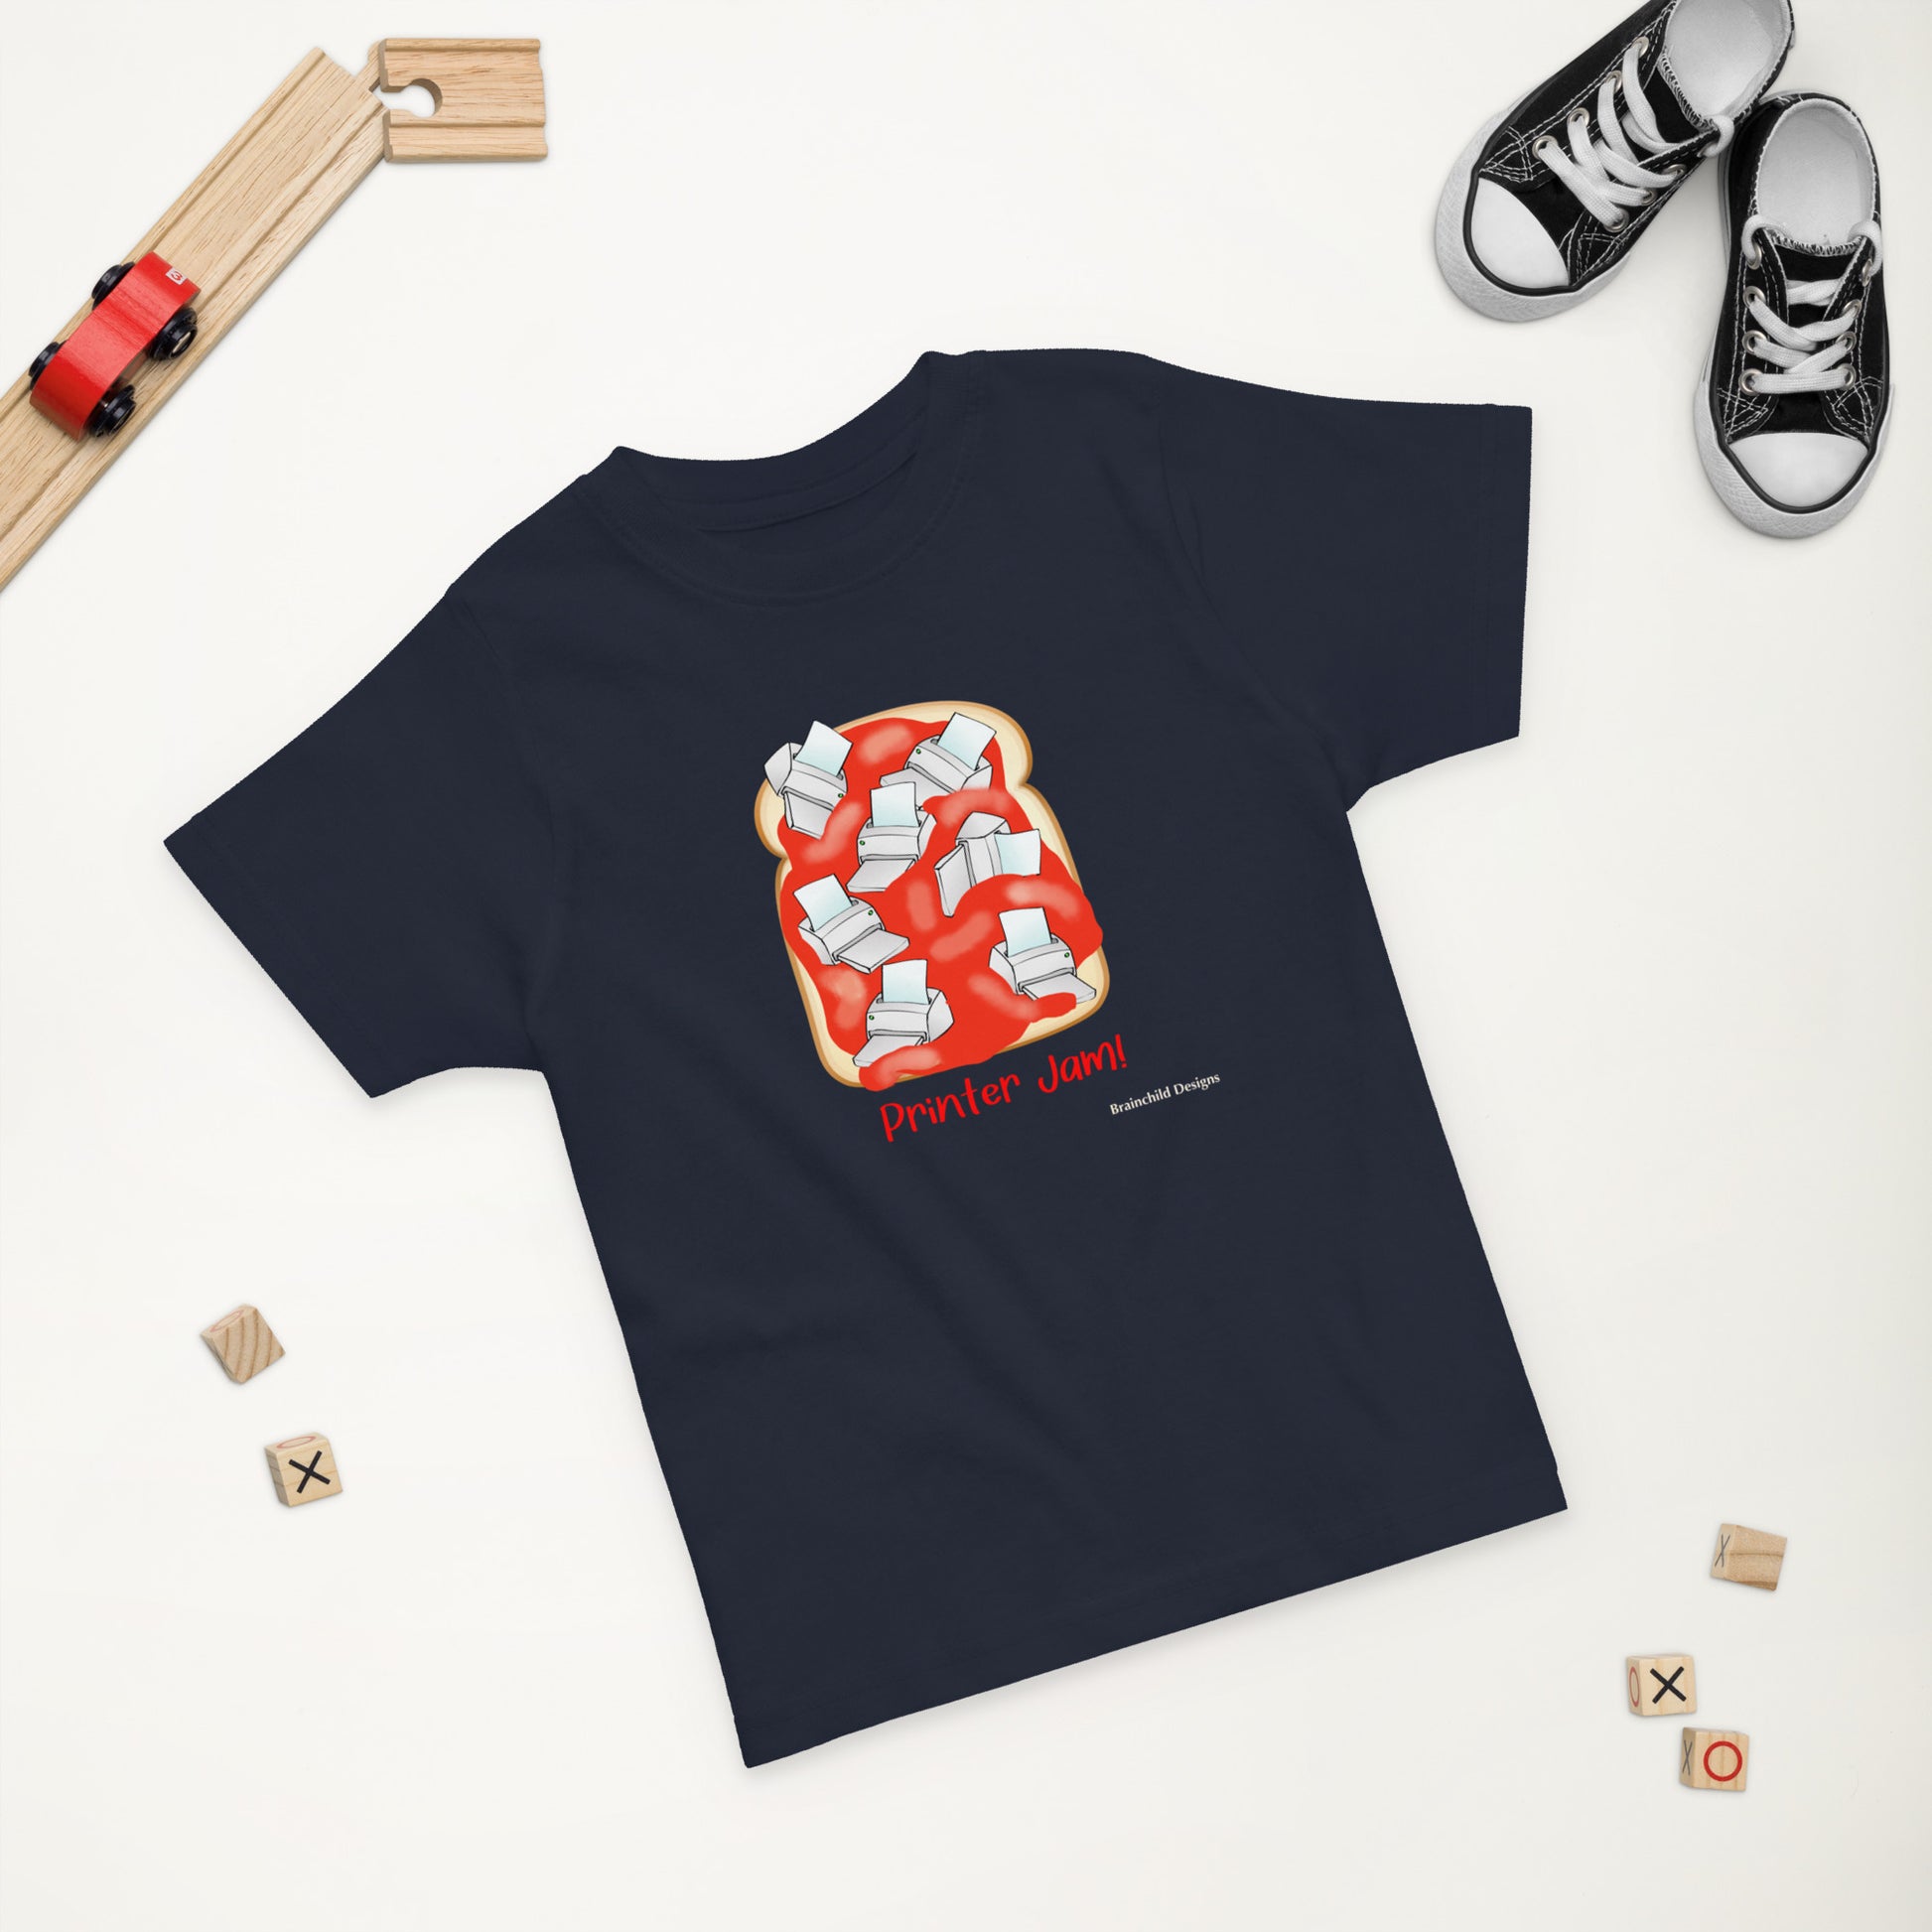 Printer Jam -Toddler jersey t-shirt - Brainchild Designs